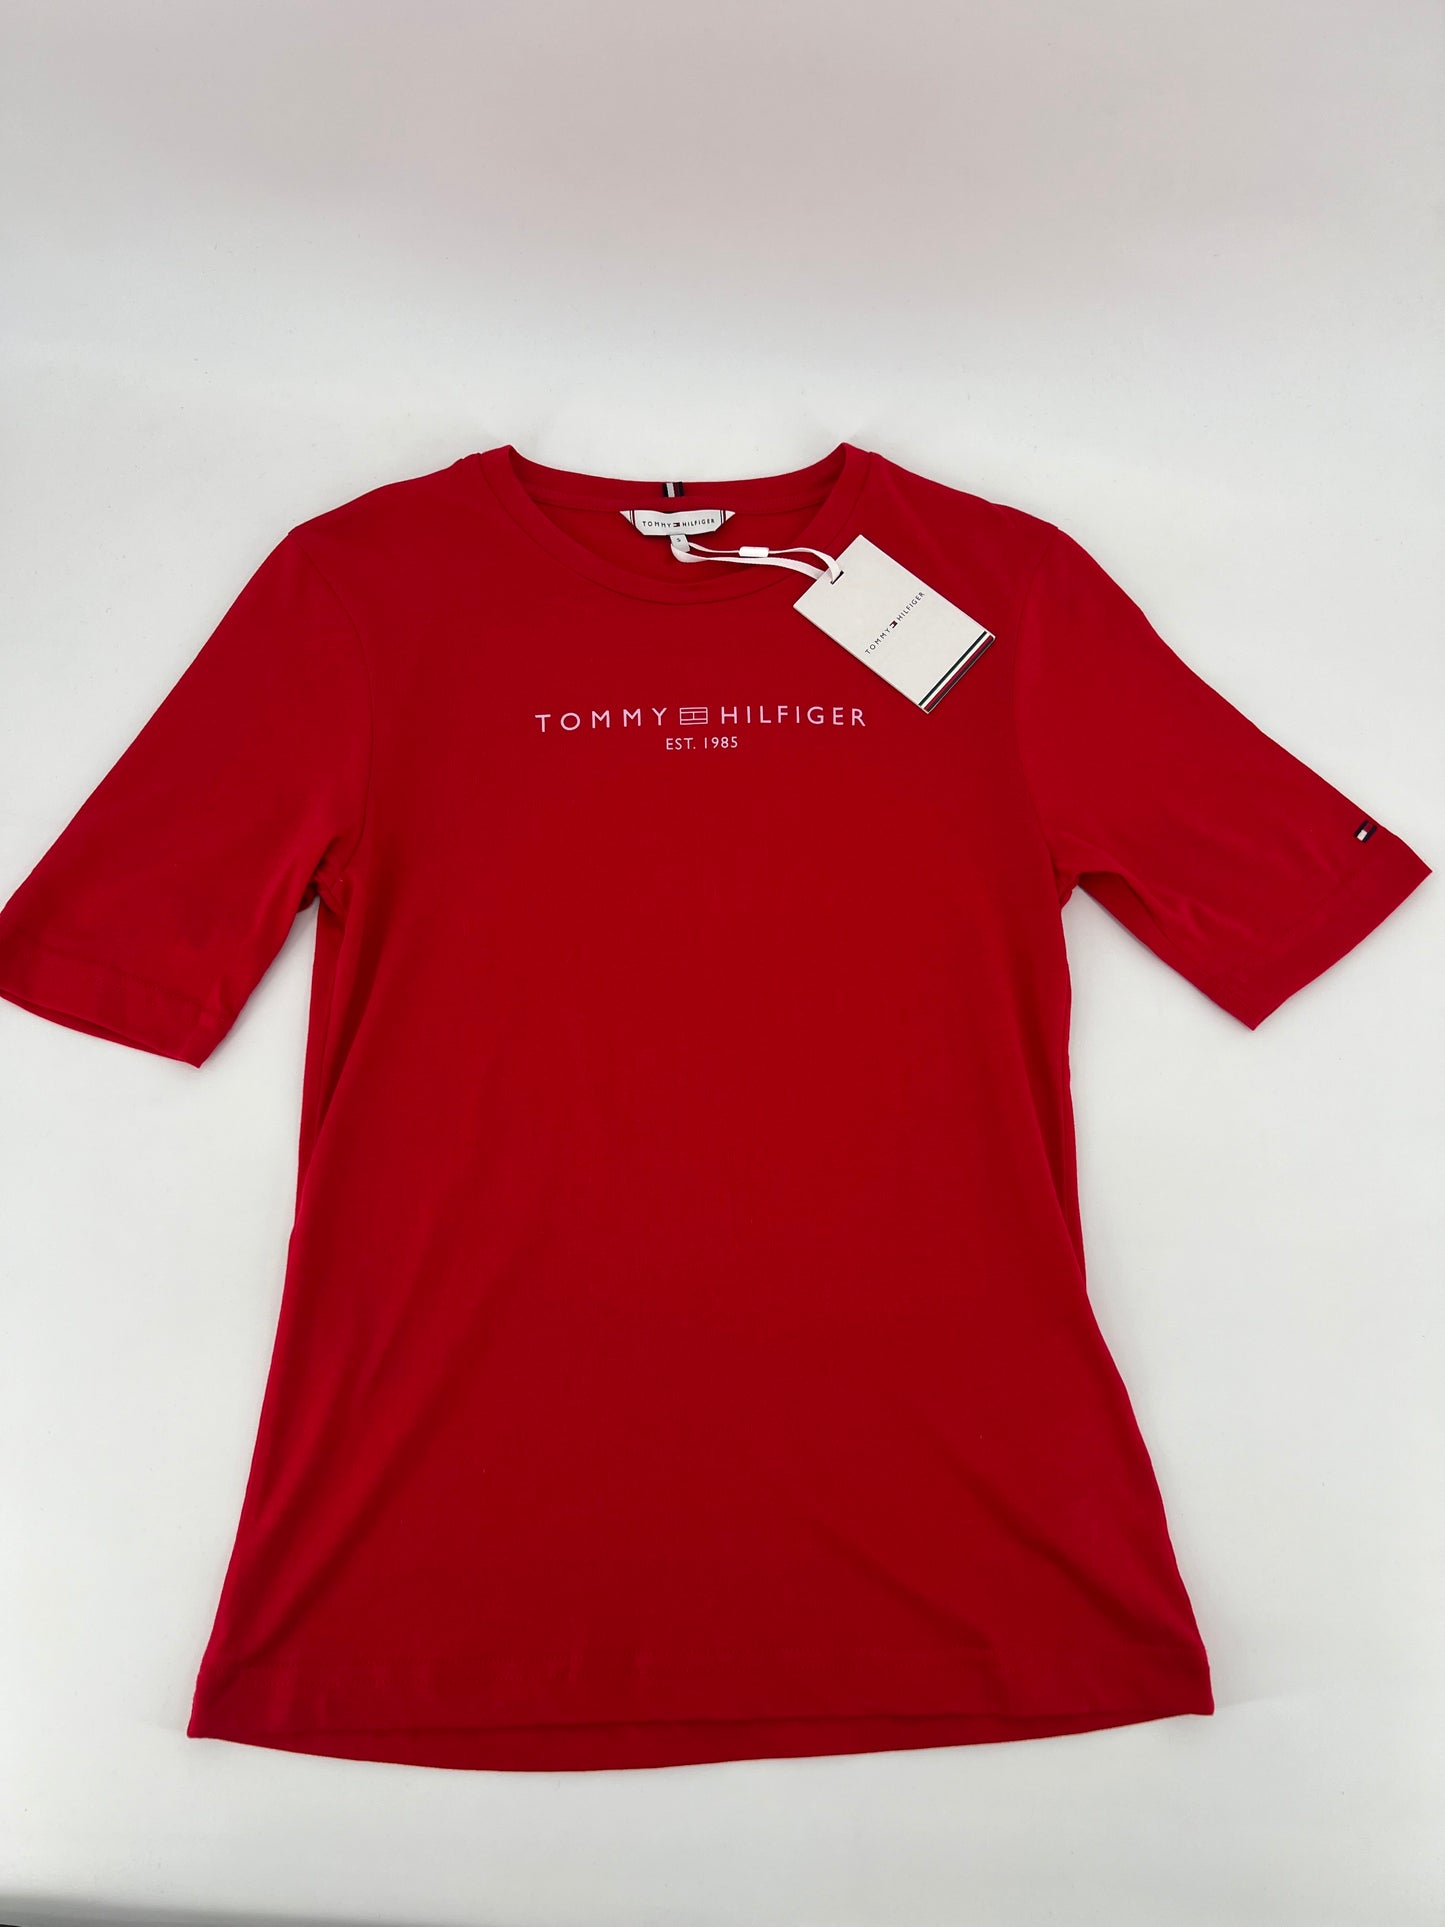 TOMMY HILFIGER - Tee shirt manche courte - Logo